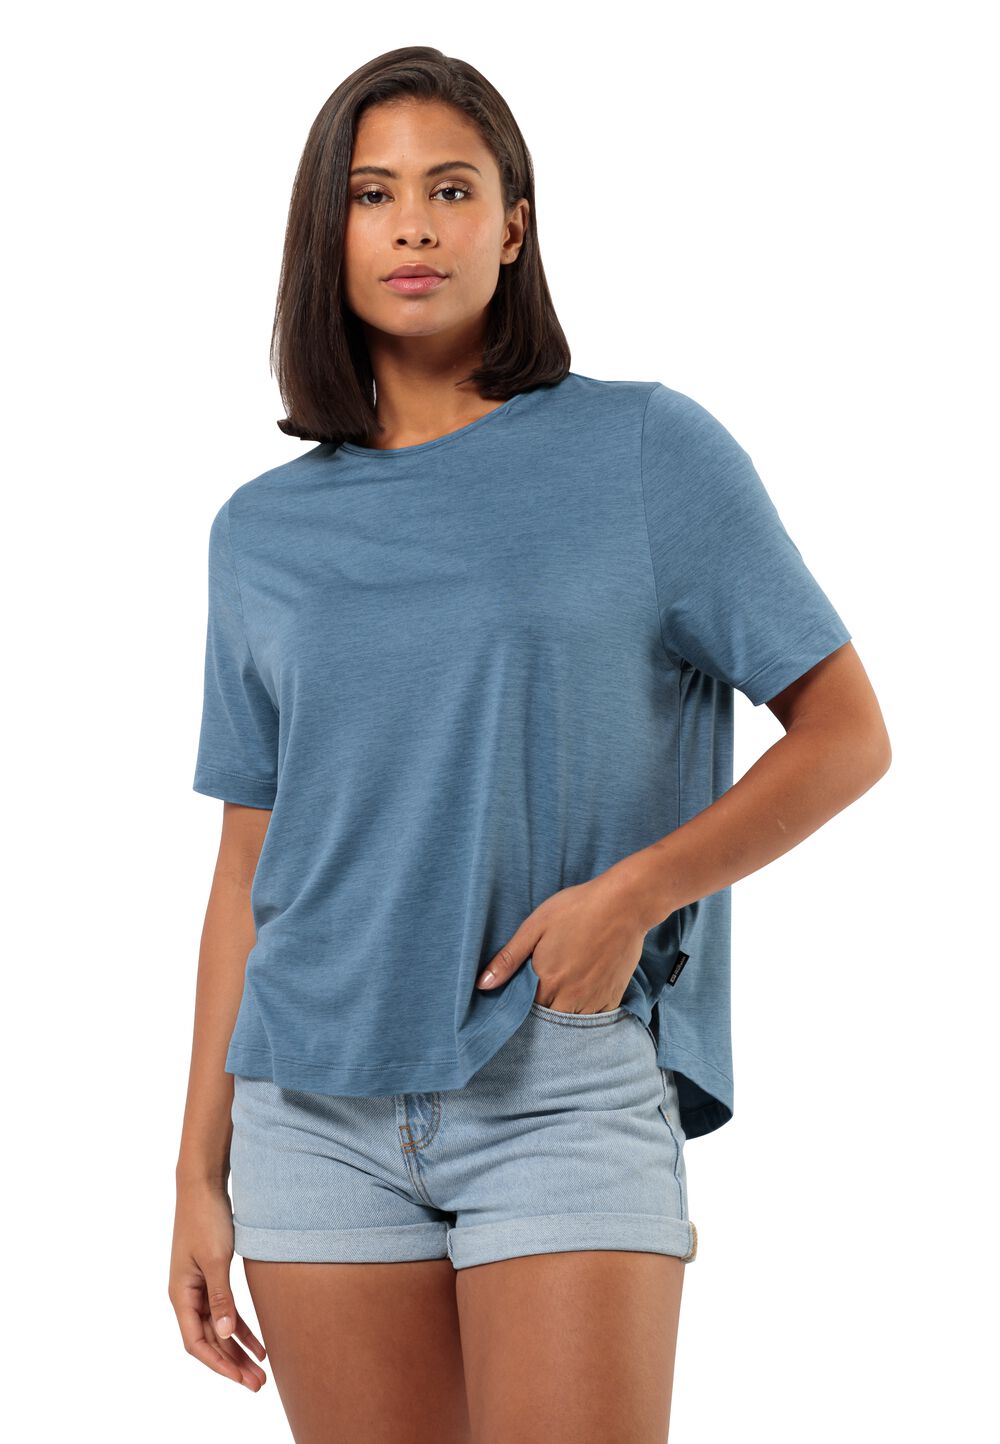 Jack Wolfskin Travel T-Shirt Women Functioneel shirt Dames M elemental blue elemental blue